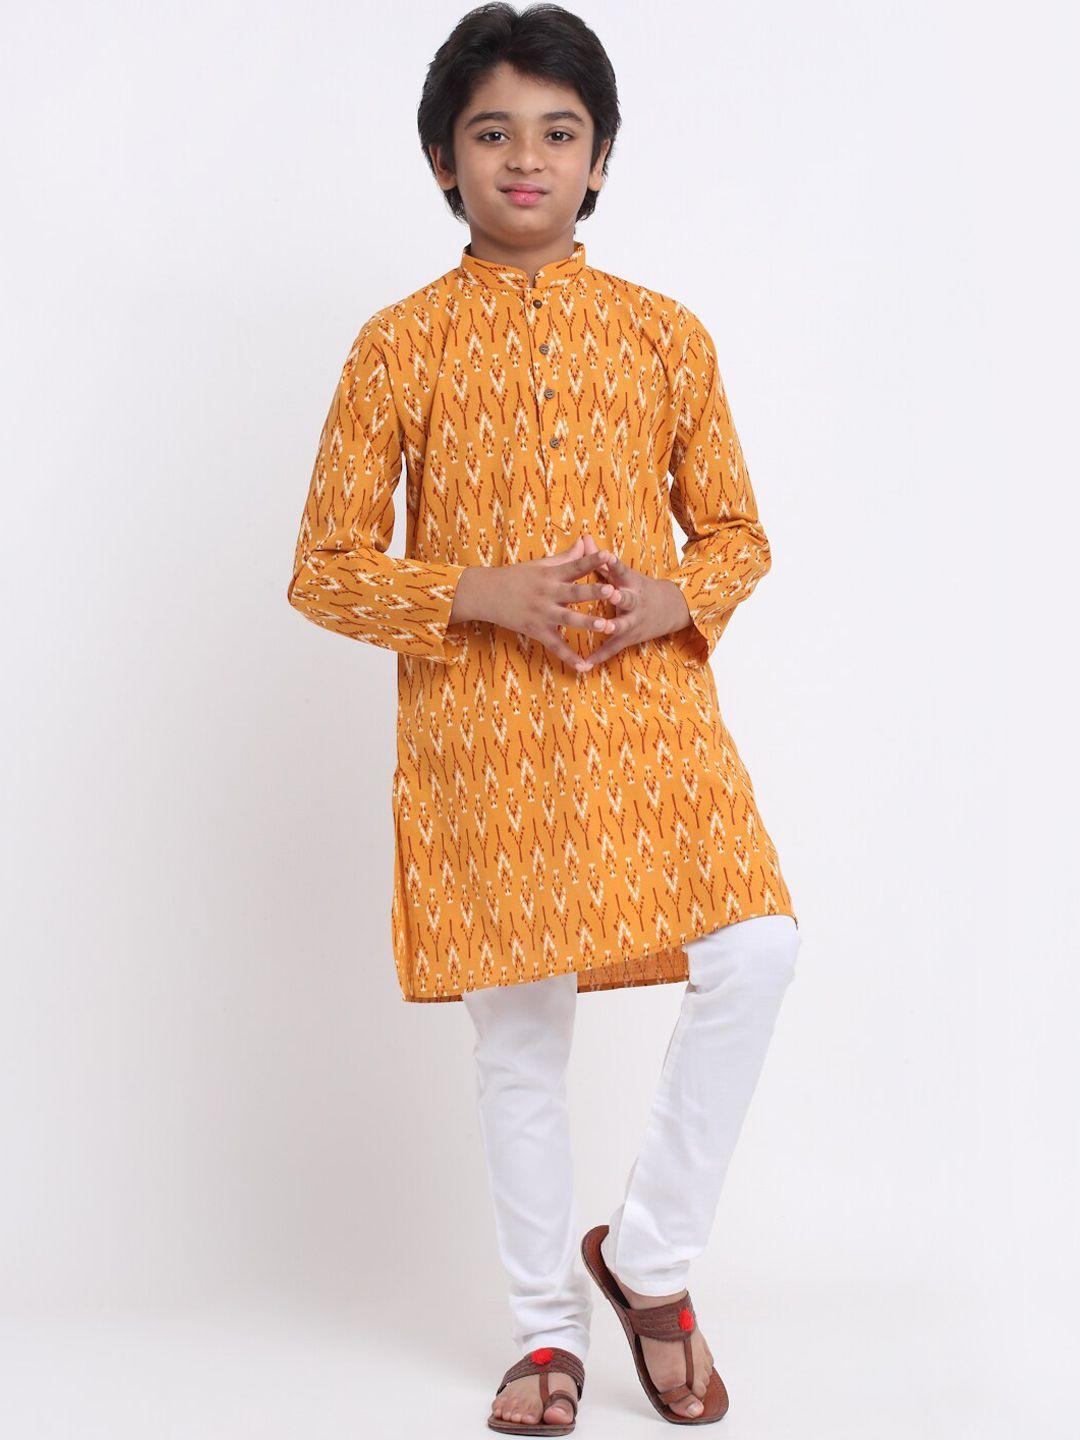 kraft india boys yellow ethnic motifs printed kurta with pyjamas